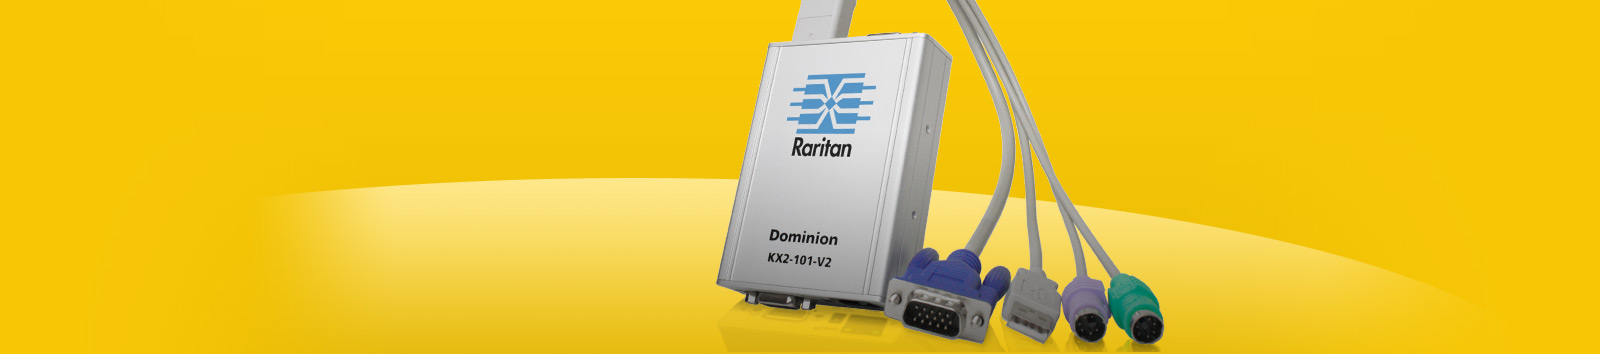 Raritan Dominion DKX2-101-V2 2 User 1 Port KVM Over IP KVM Gateway